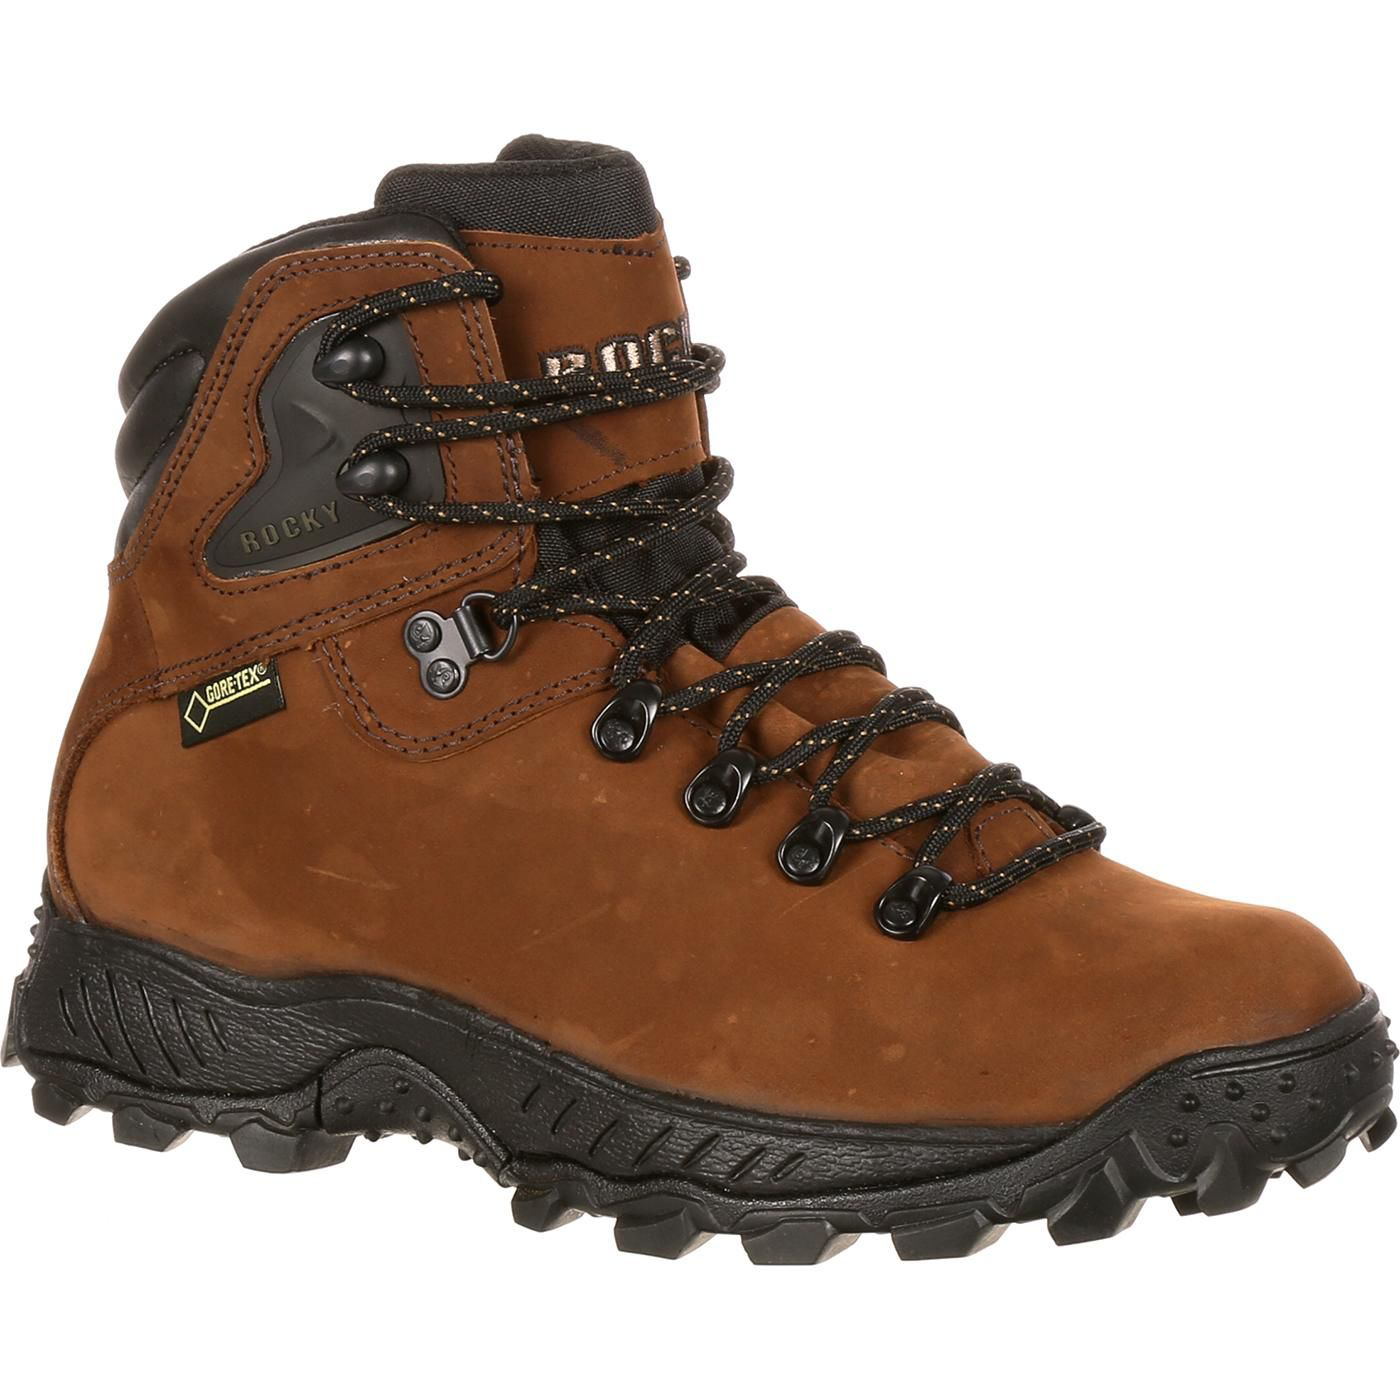 Rocky Ridgetop GORE-TEX 6"" Hiking Boots for Men - Brown - 13M